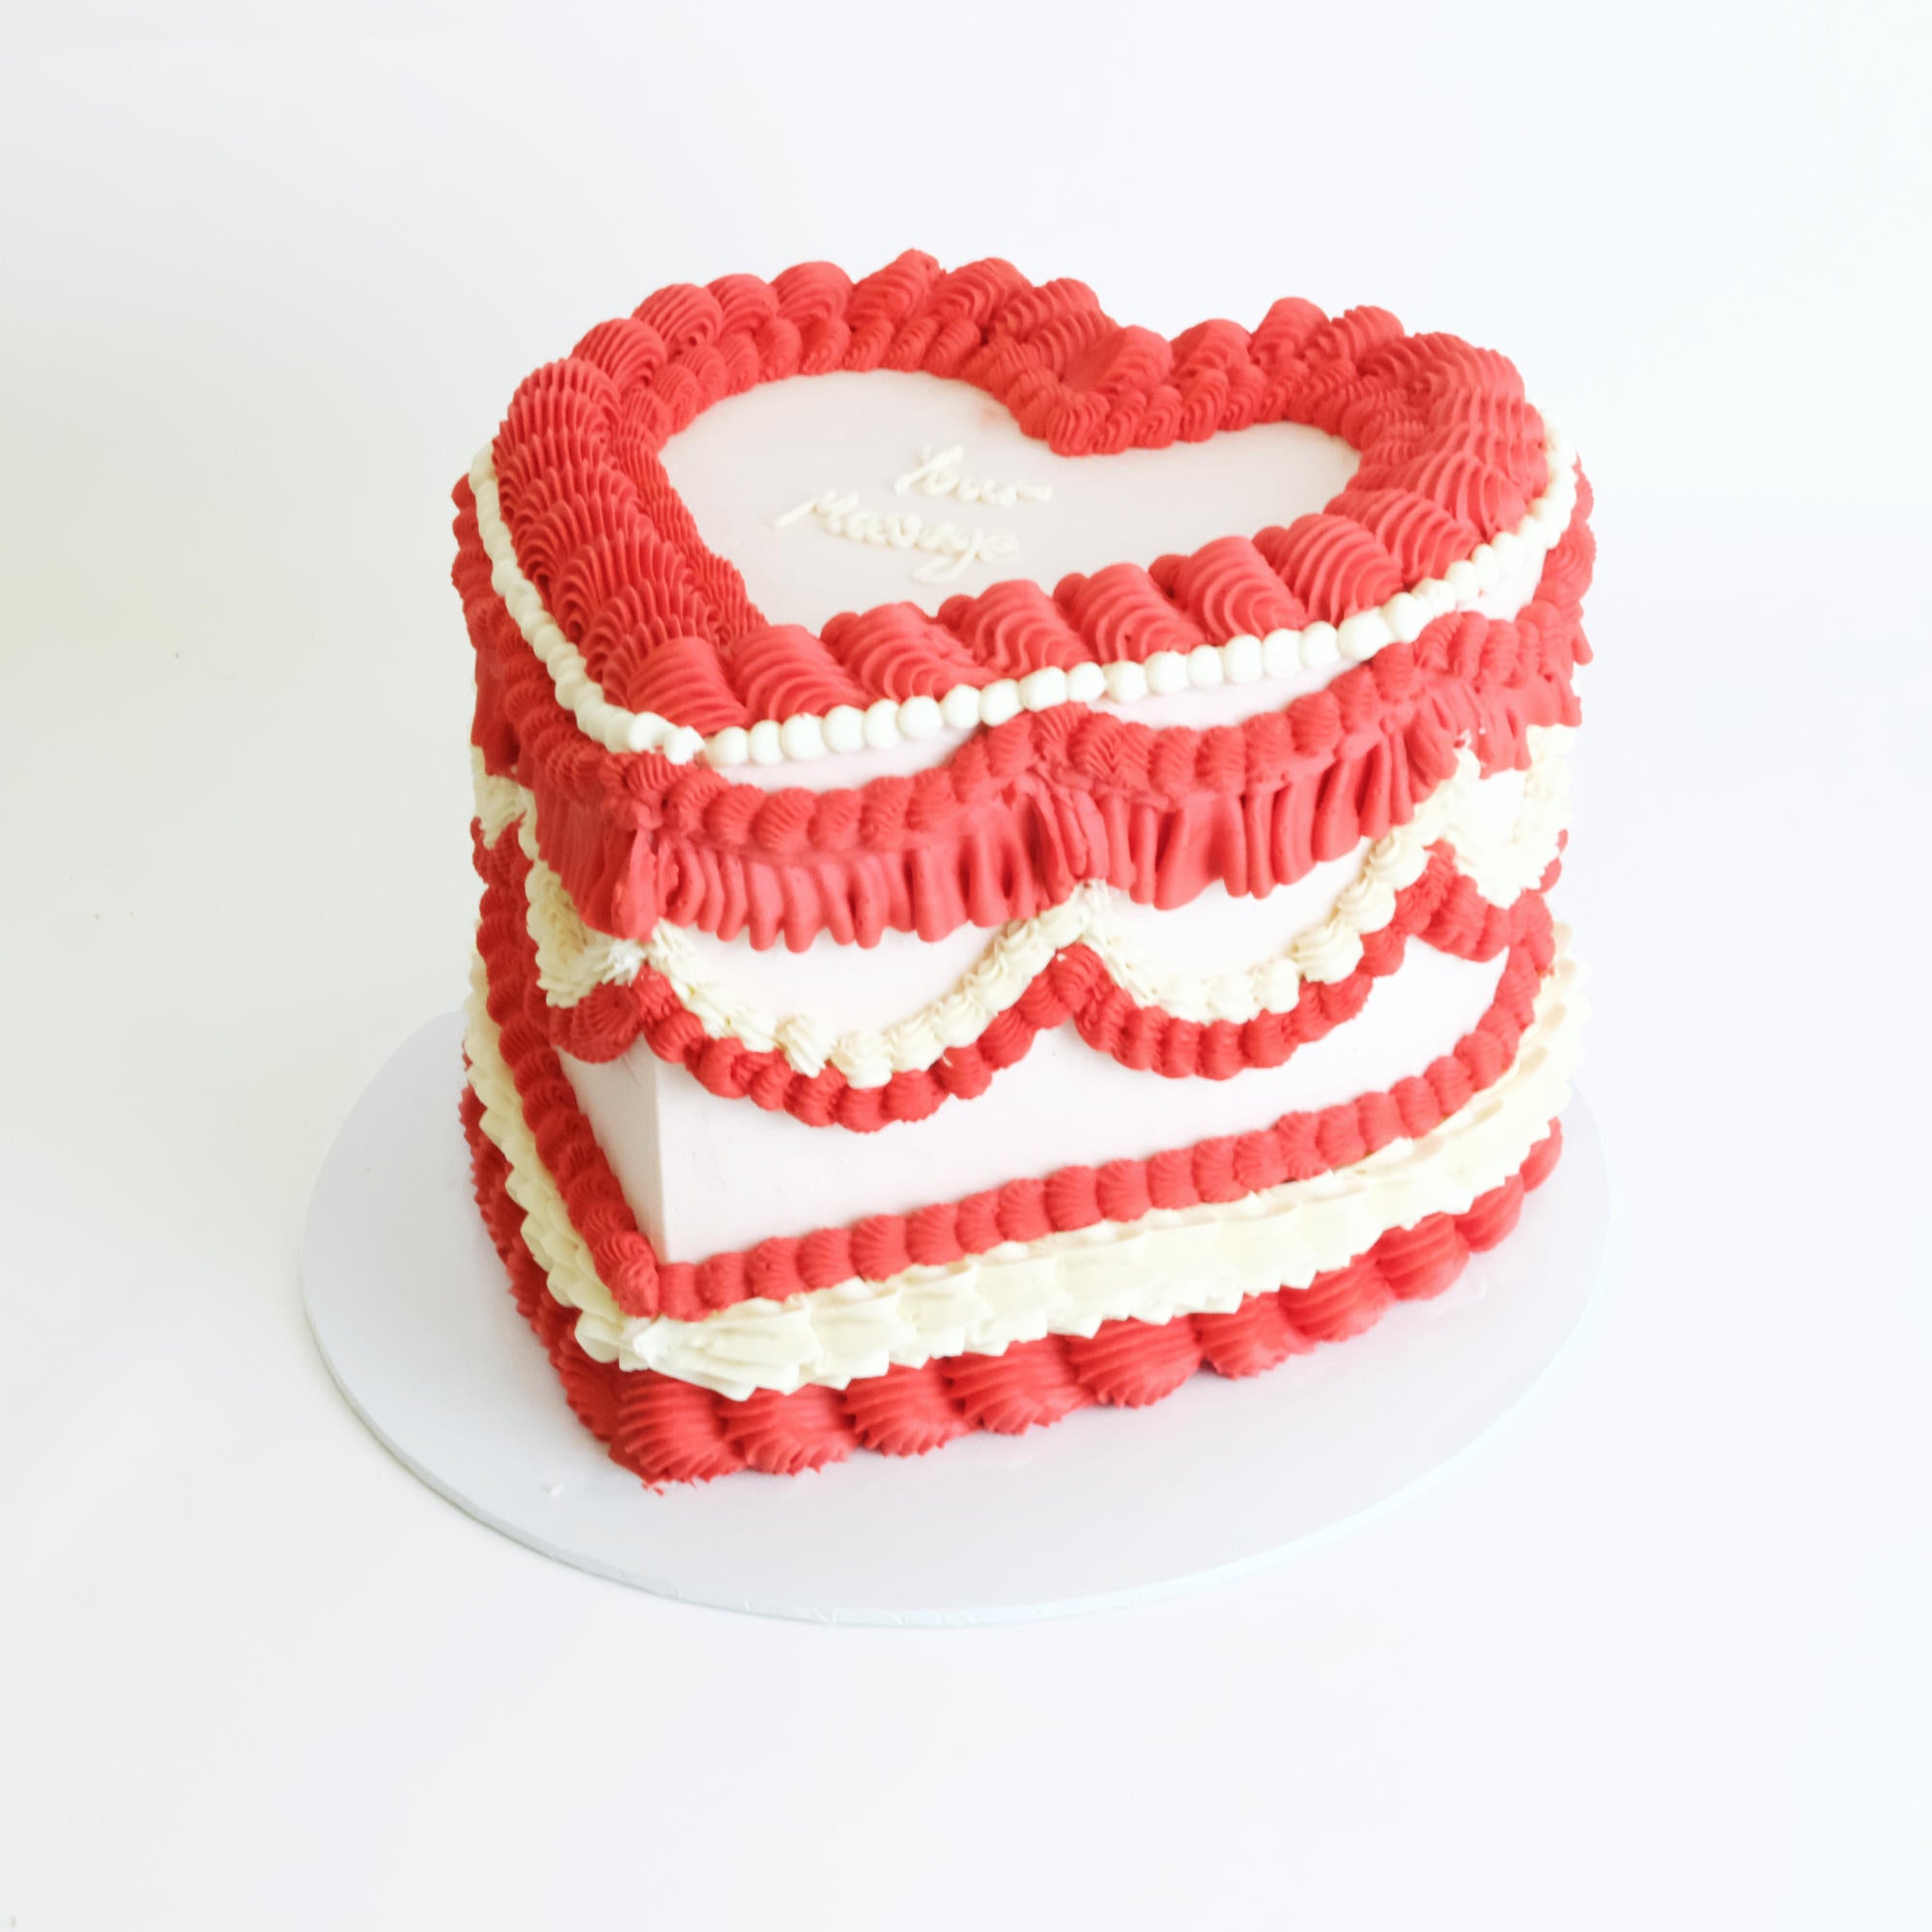 Best Heart-Shaped Cake Recipe - How To Make a Heart-Shaped Cake